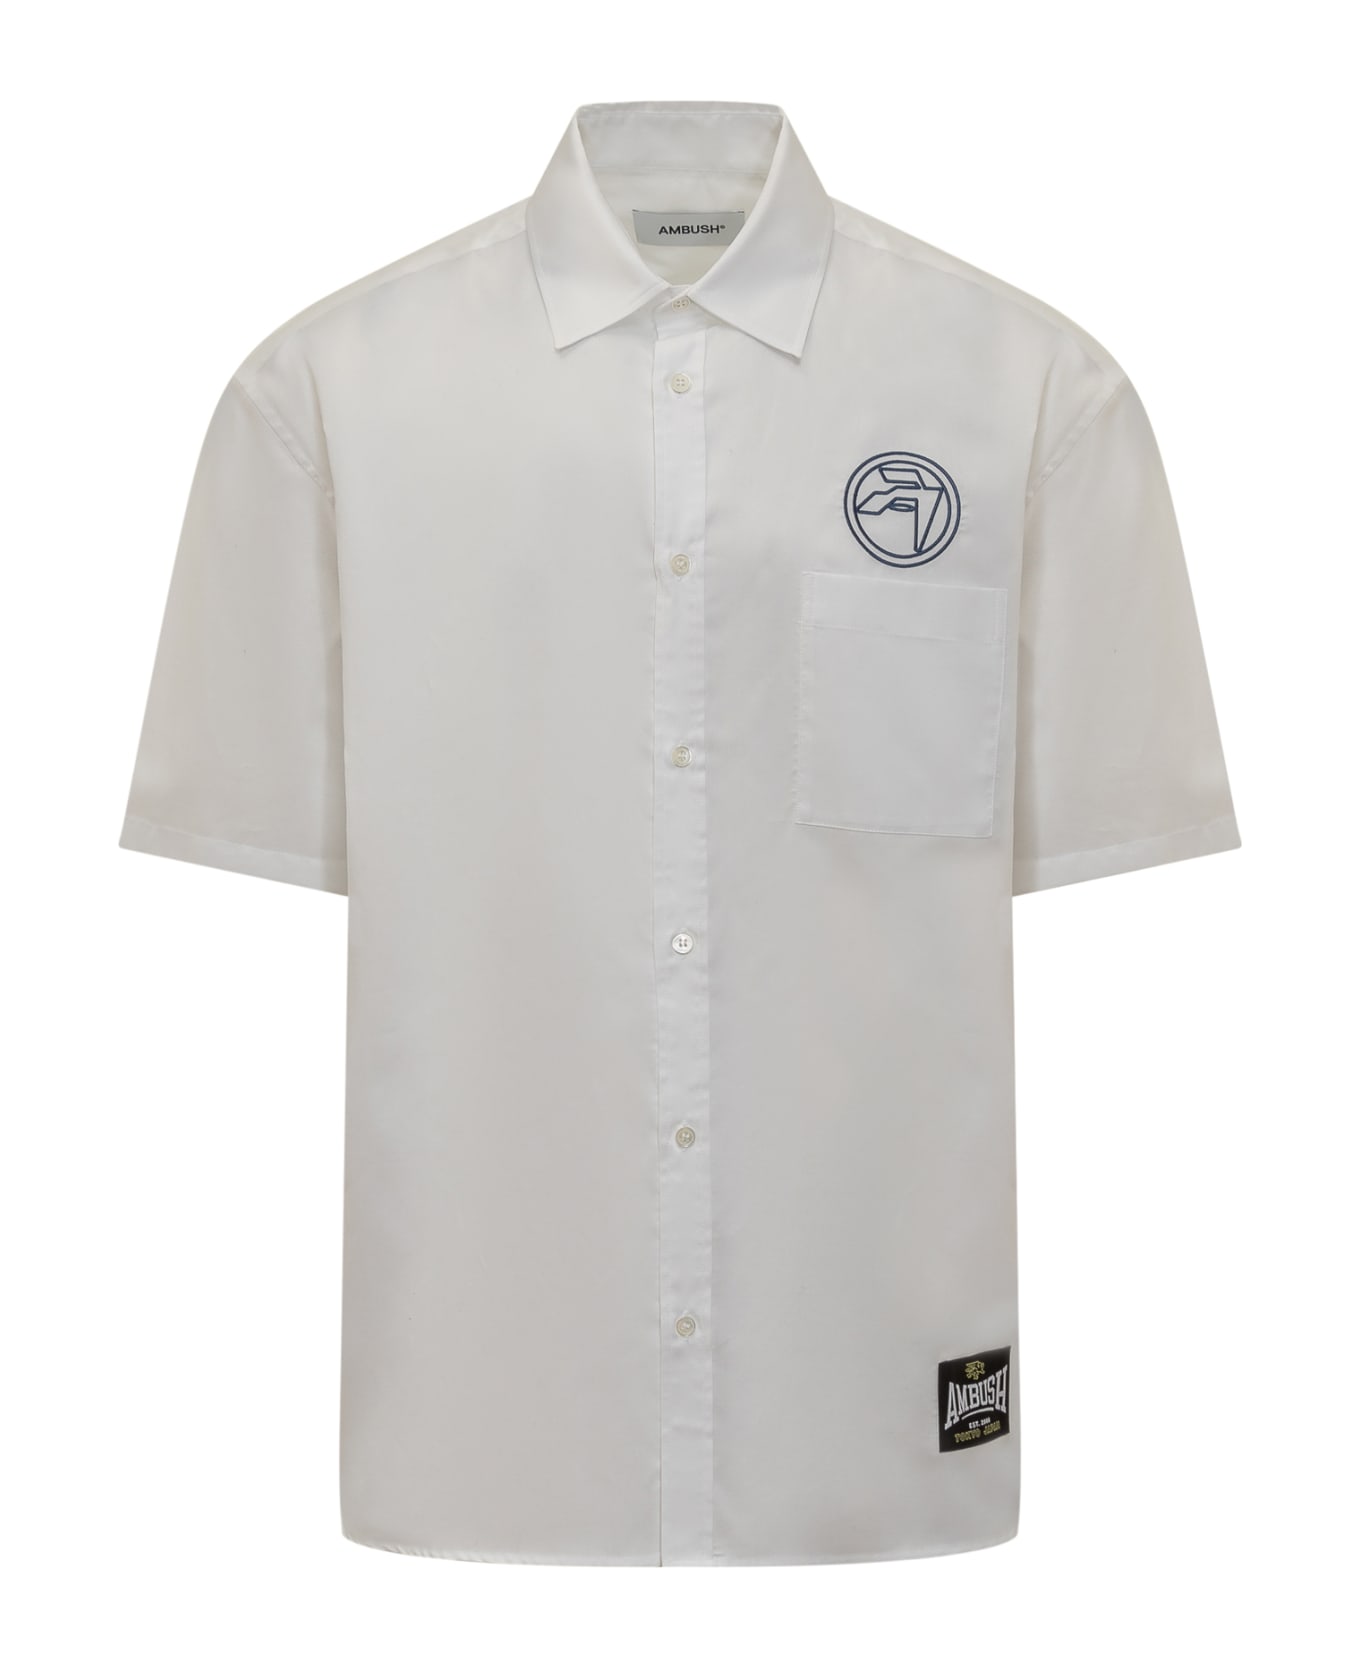 AMBUSH Cirrle Emblematic Shirt - BLANC DE BLANC シャツ